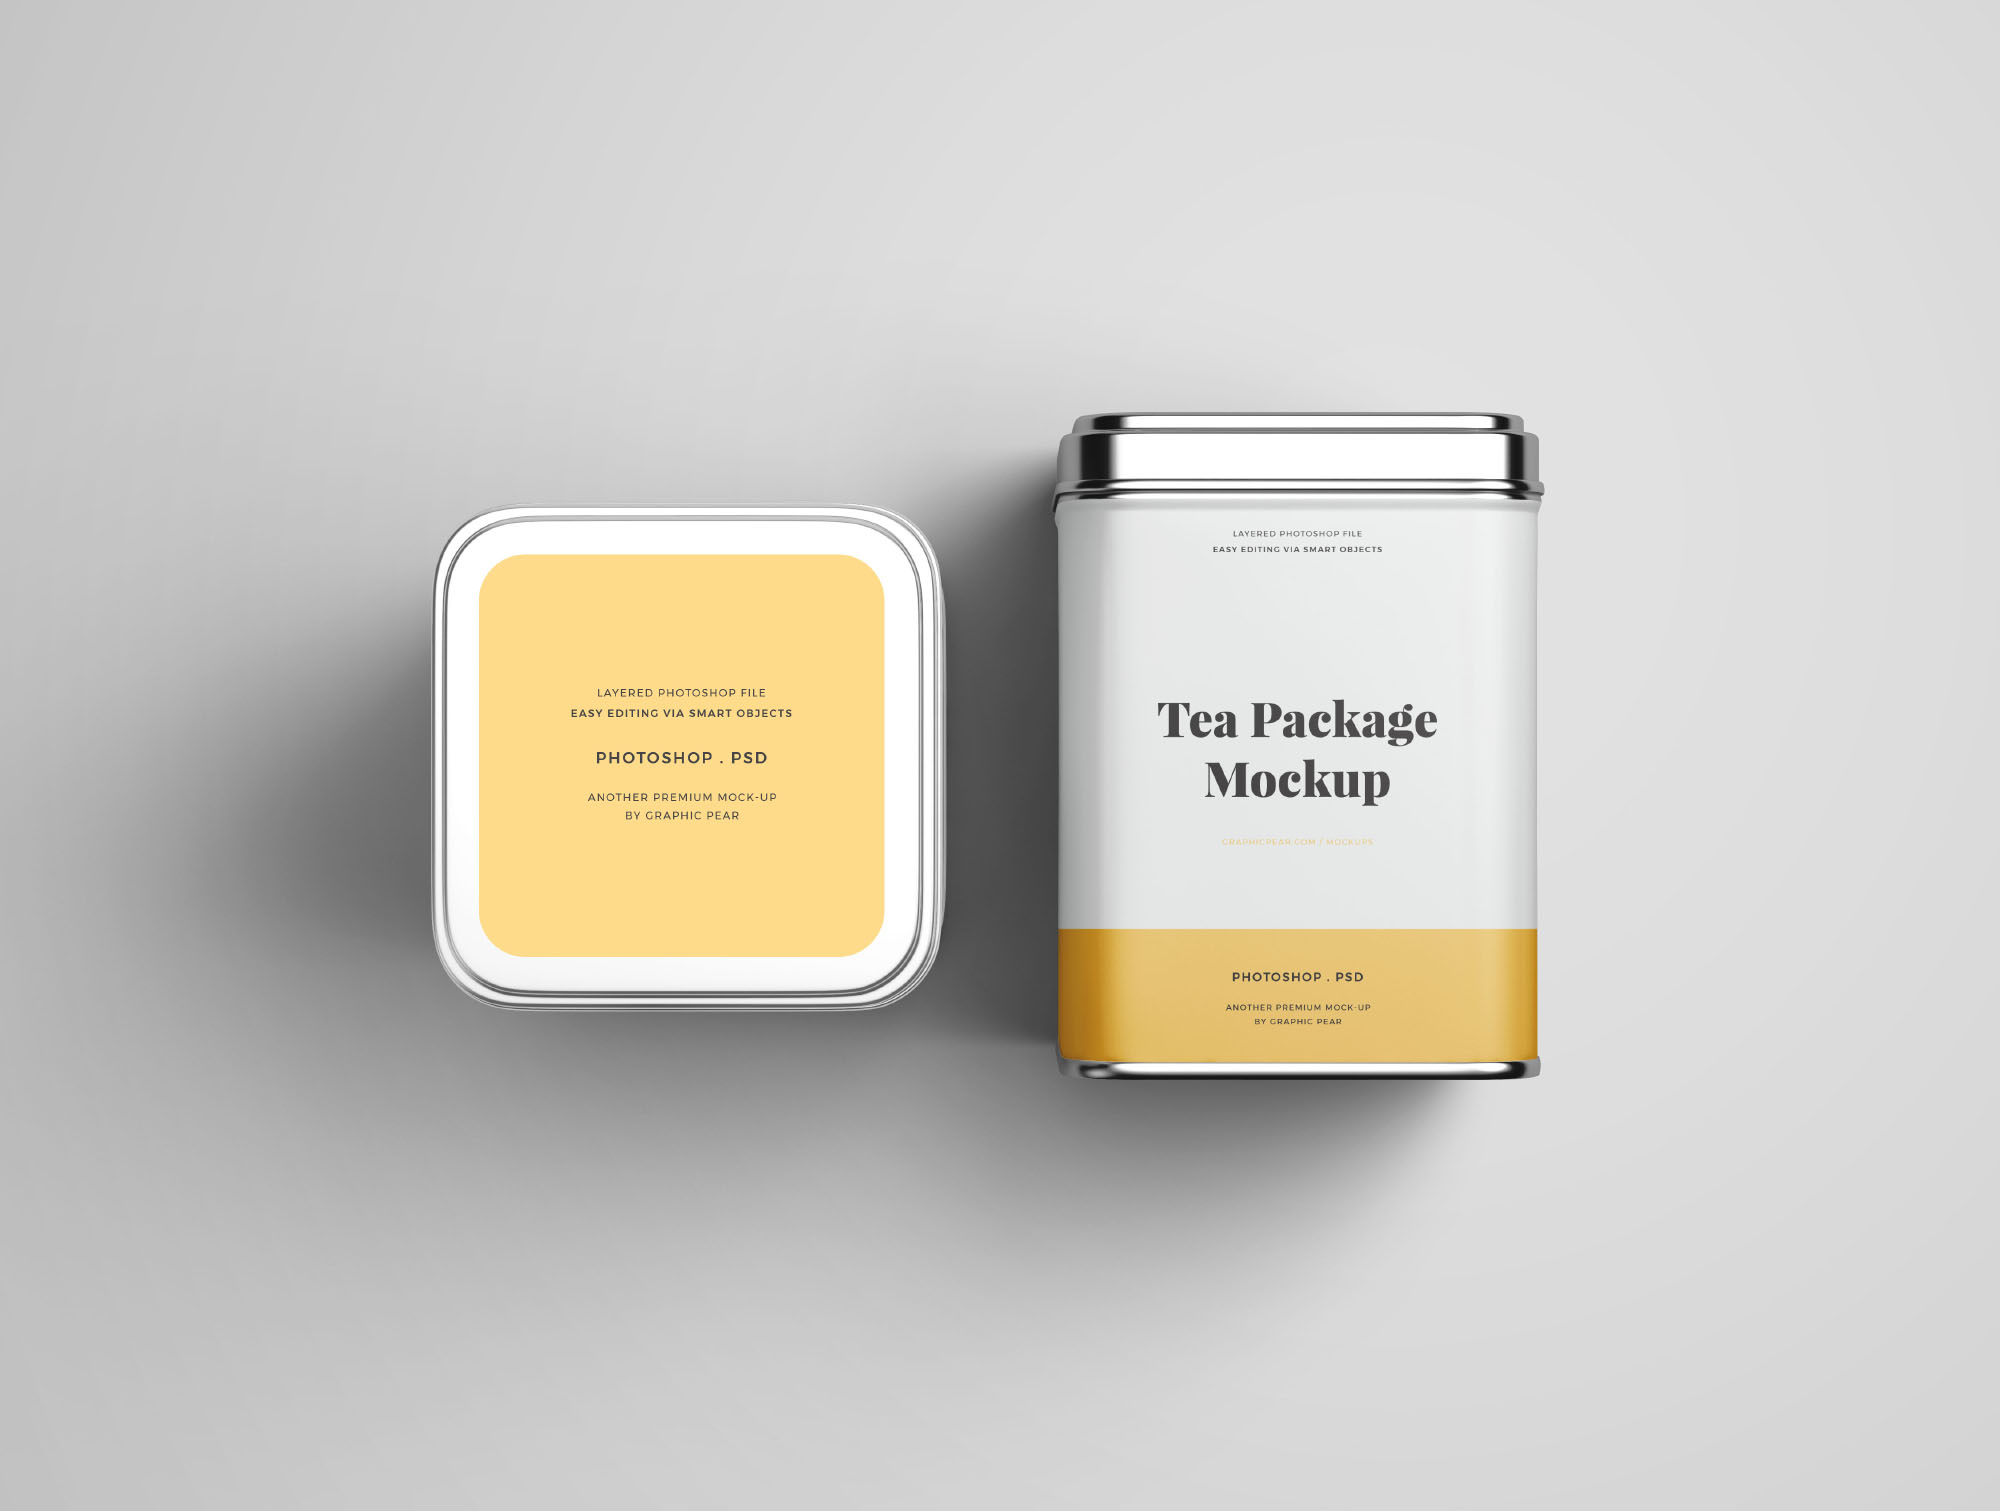 茶叶铁盒包装设计效果样机 Tea Package Mockup插图